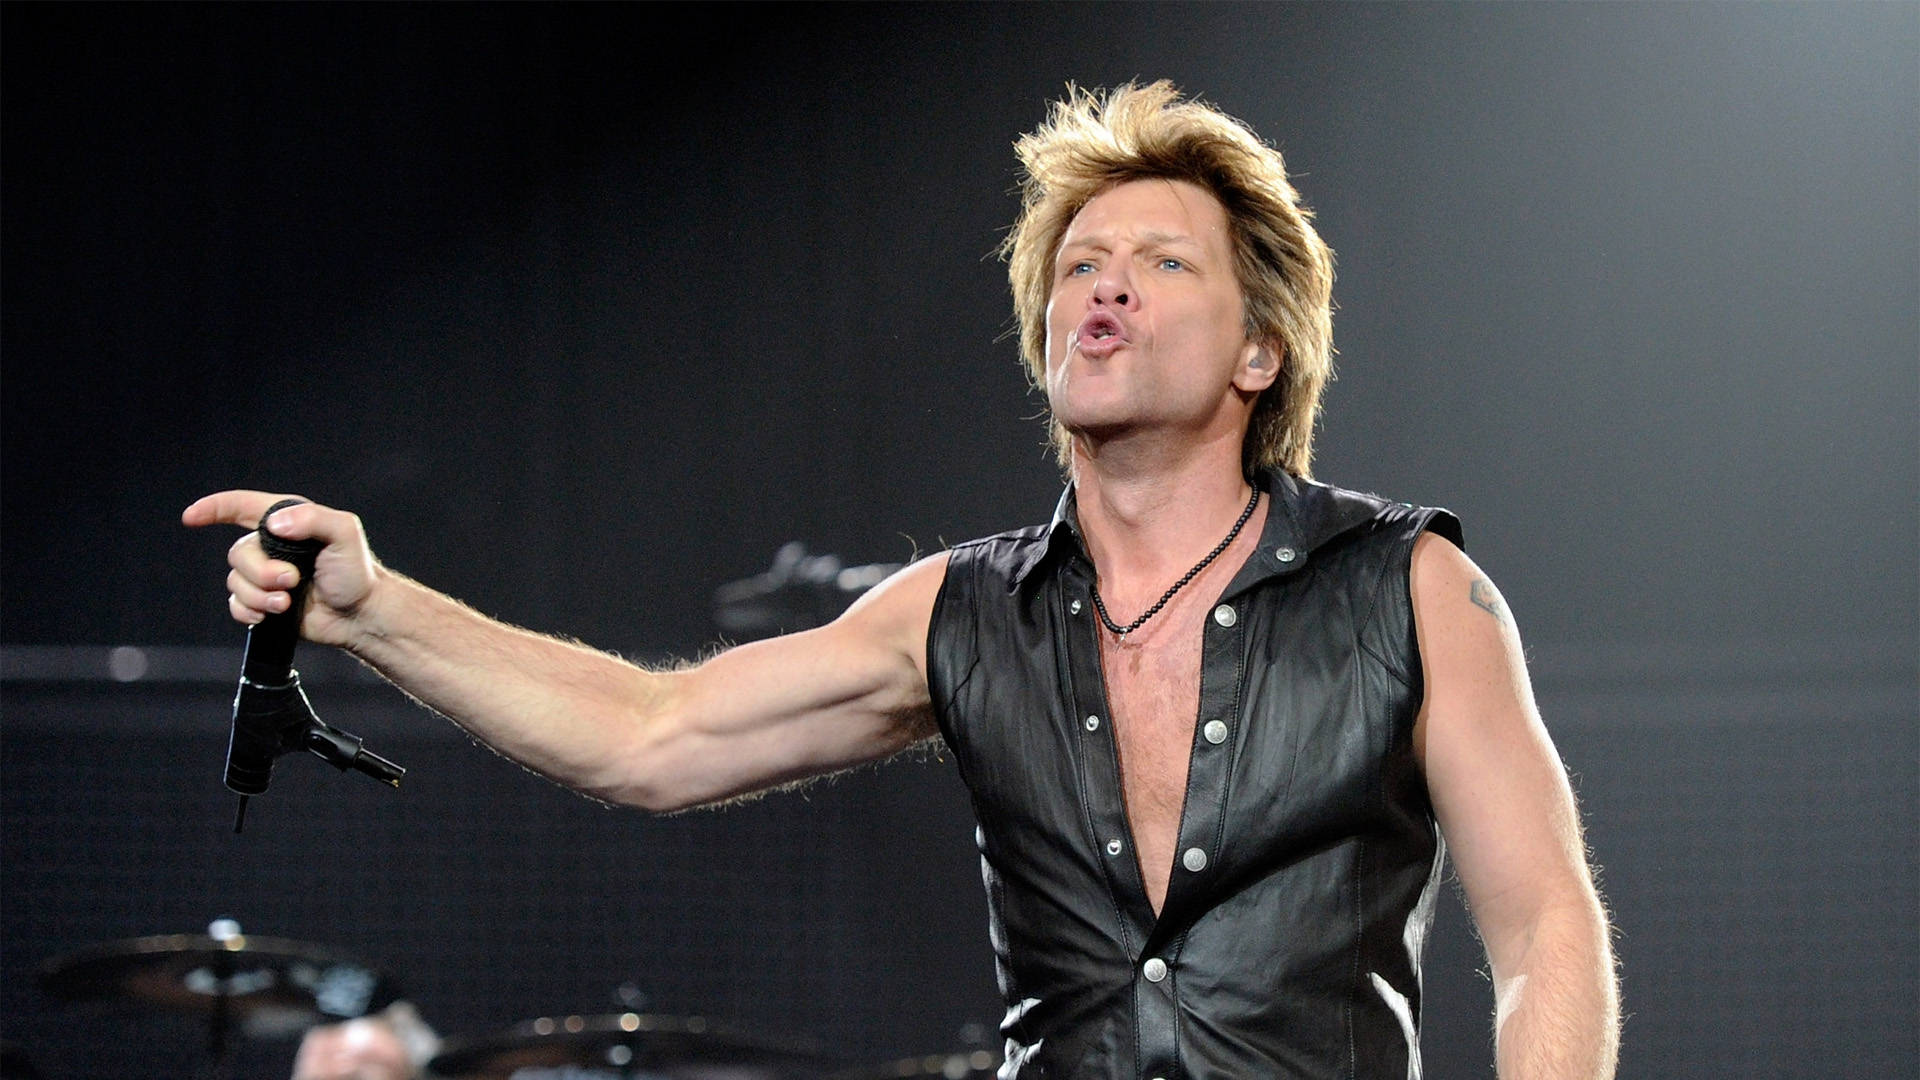 Jon Bon Jovi 2010 Performing At 02 Arena London Wallpaper